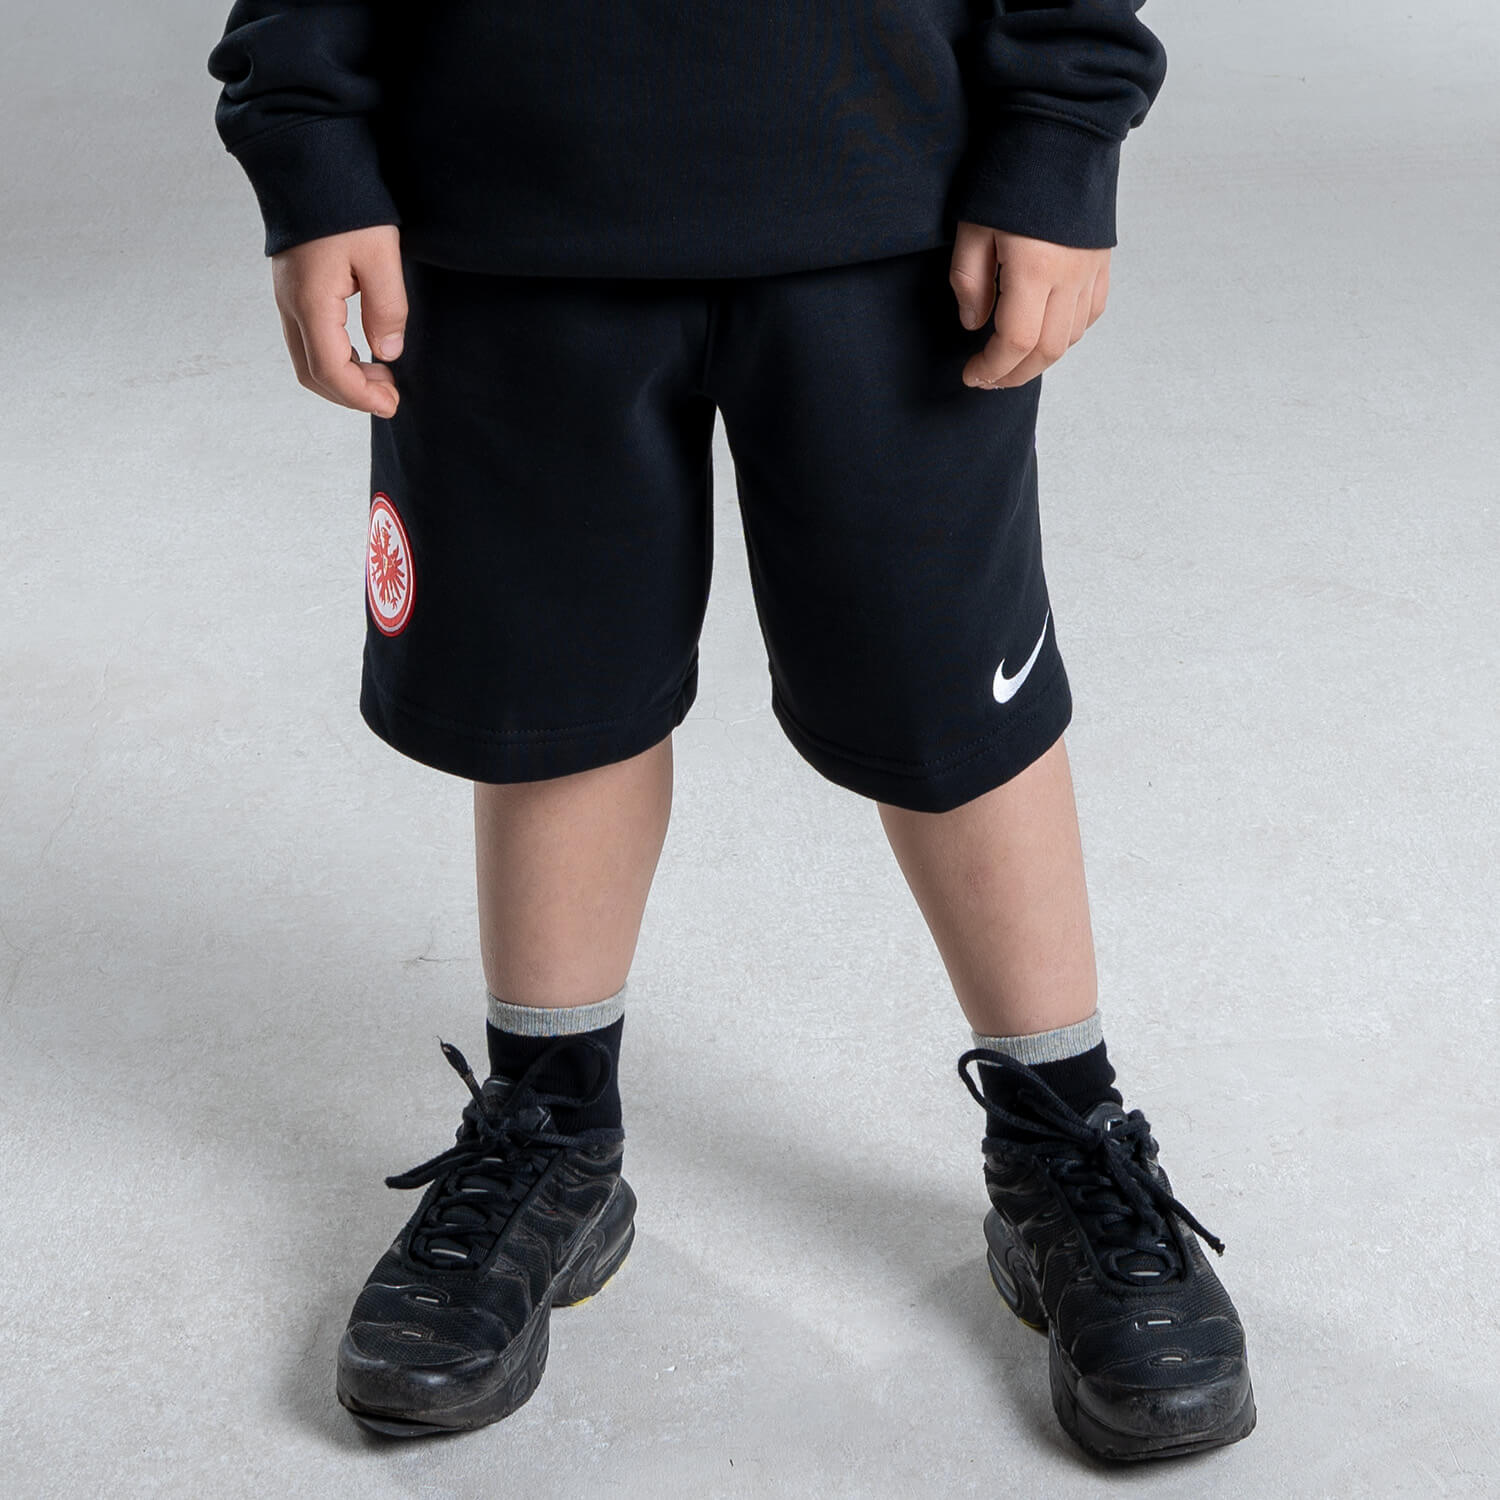 Bild 3: Nike Kids-Hose kurz Basic schwarz